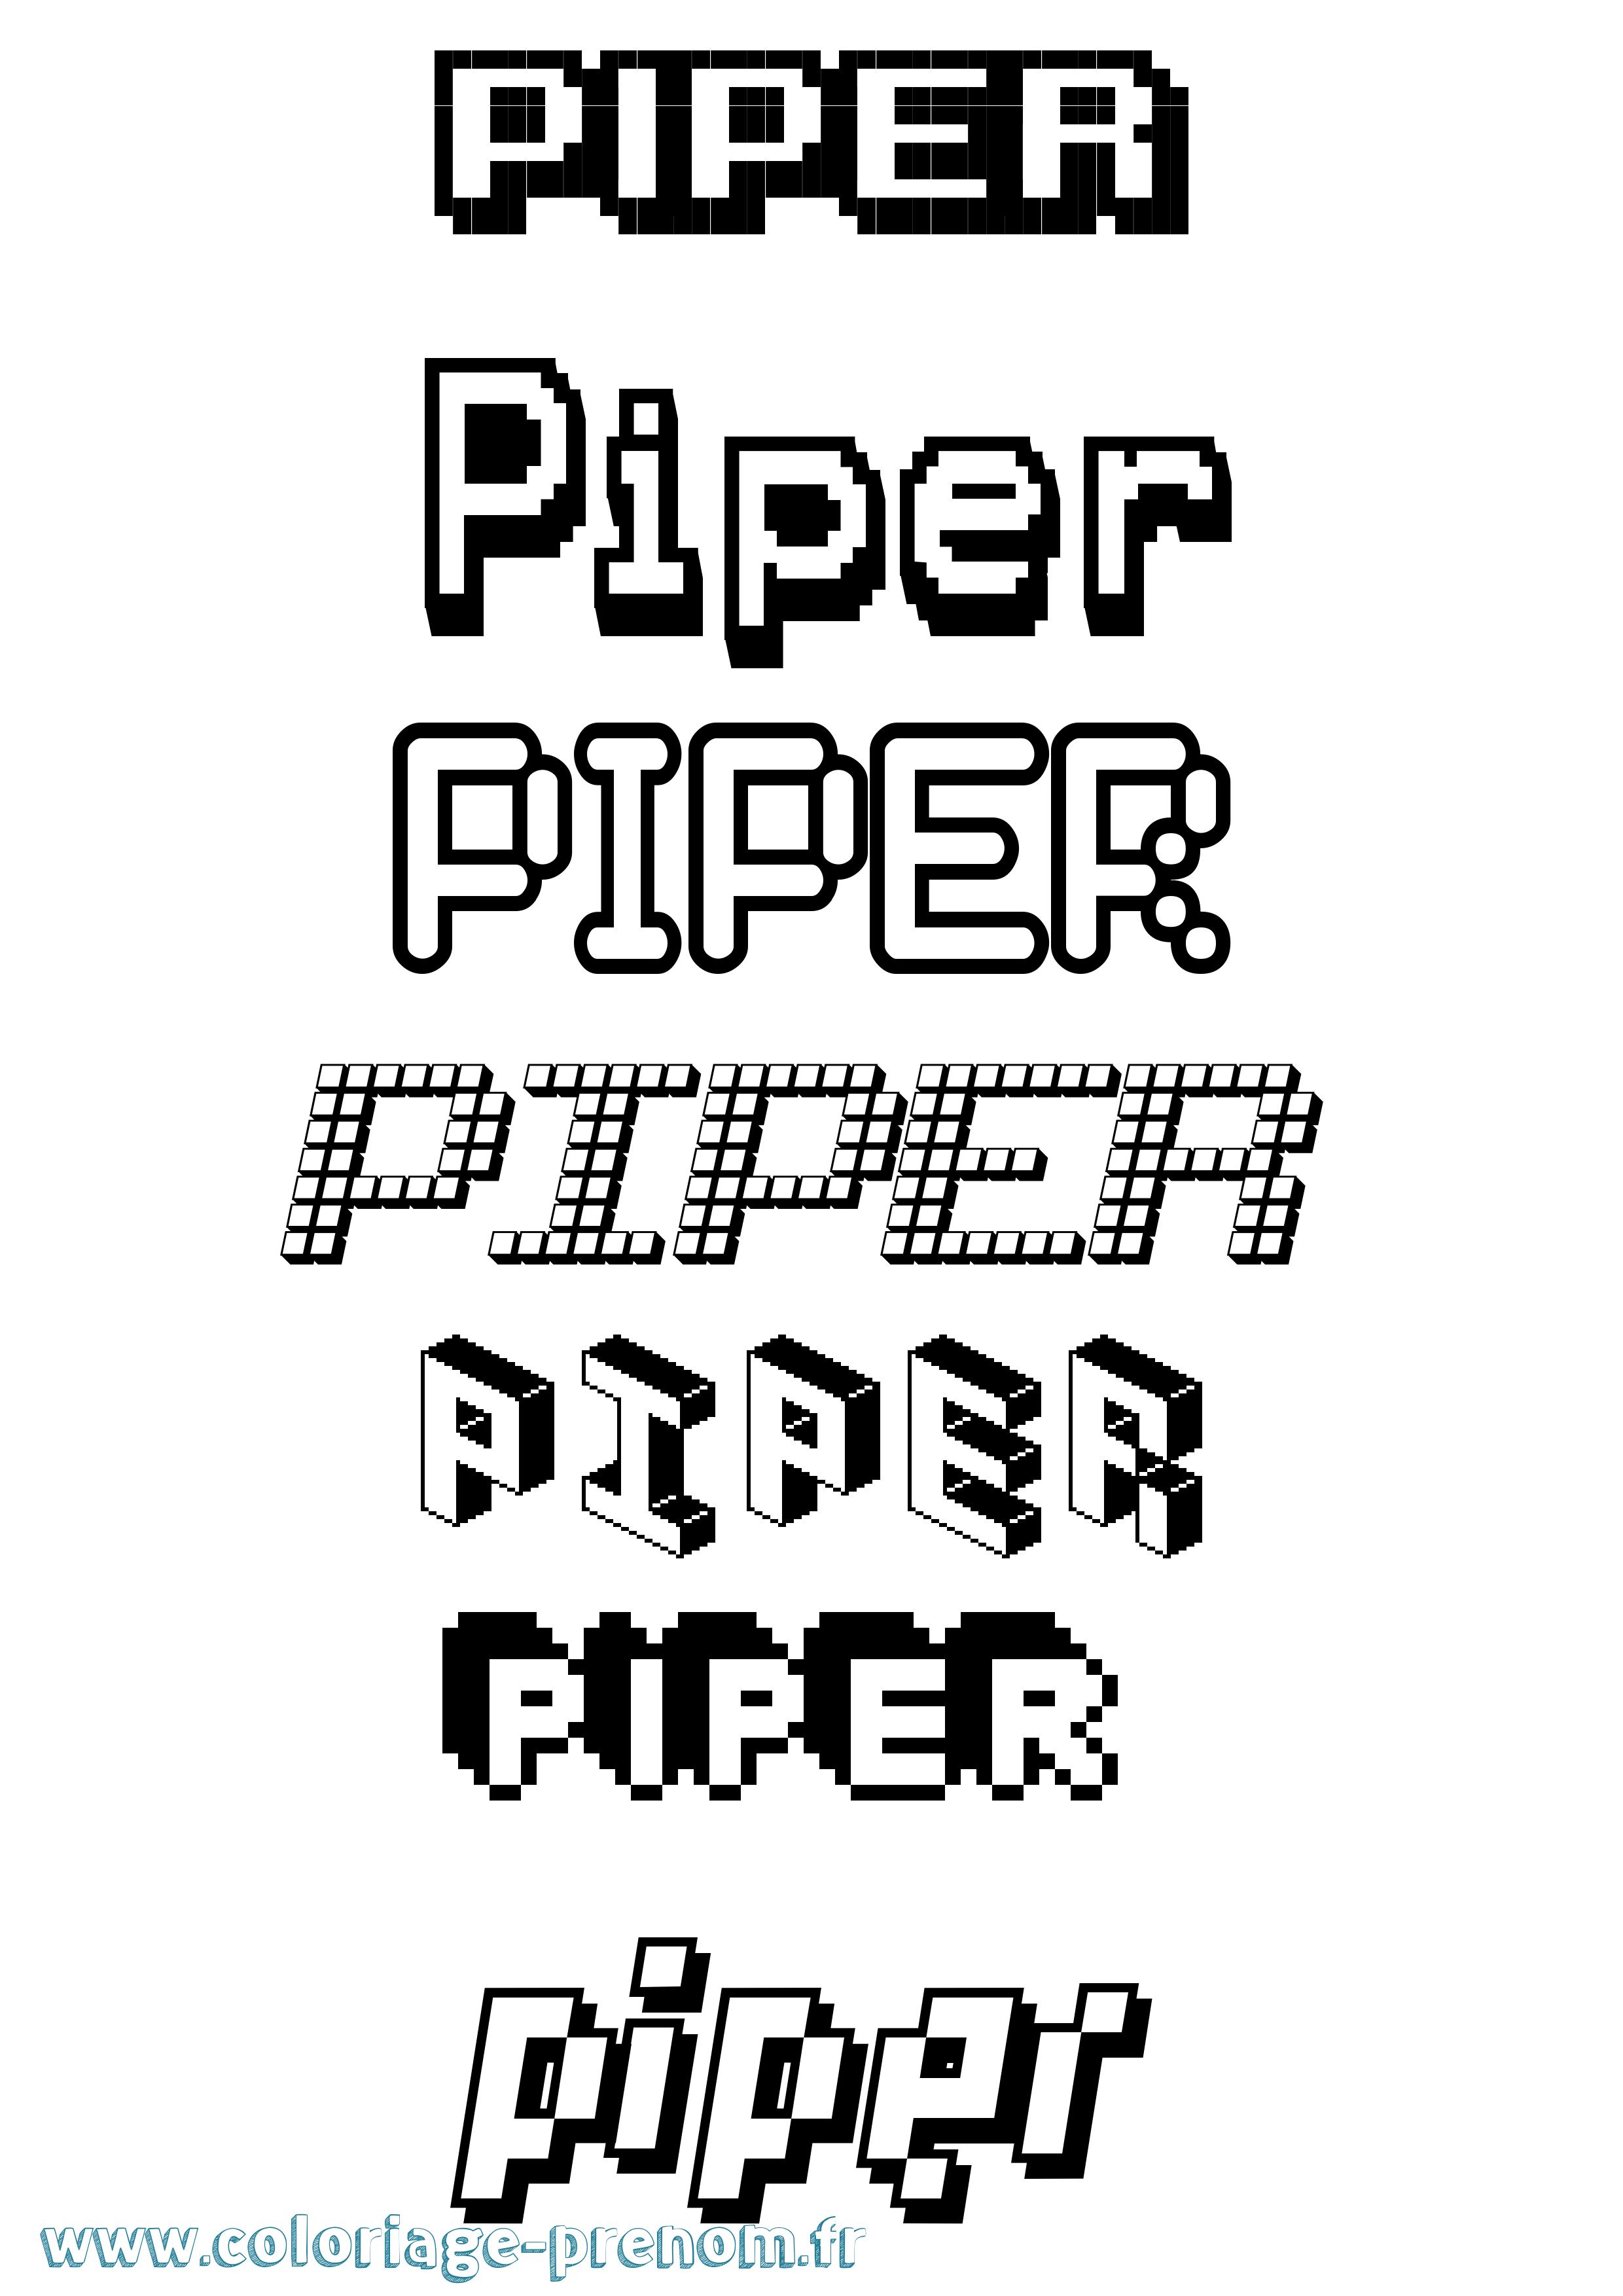 Coloriage prénom Piper Pixel